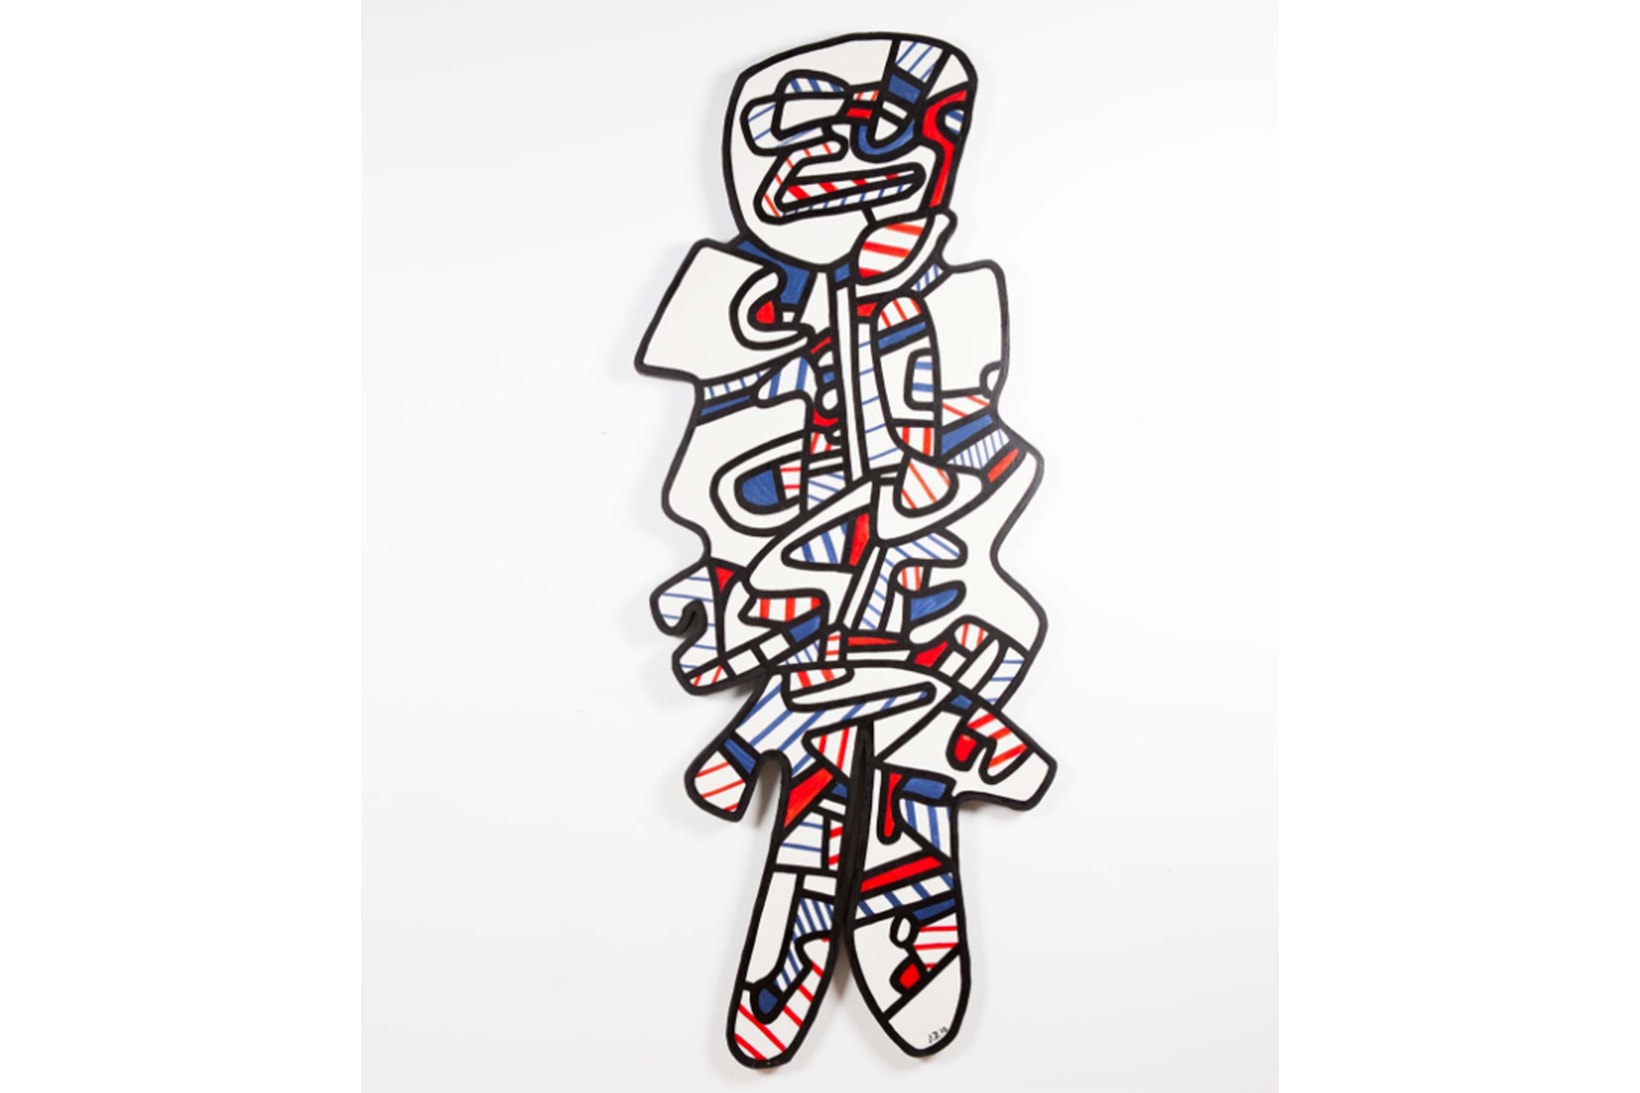 Tommy Hilfiger Auctions Basquiat, Warhol Artwork